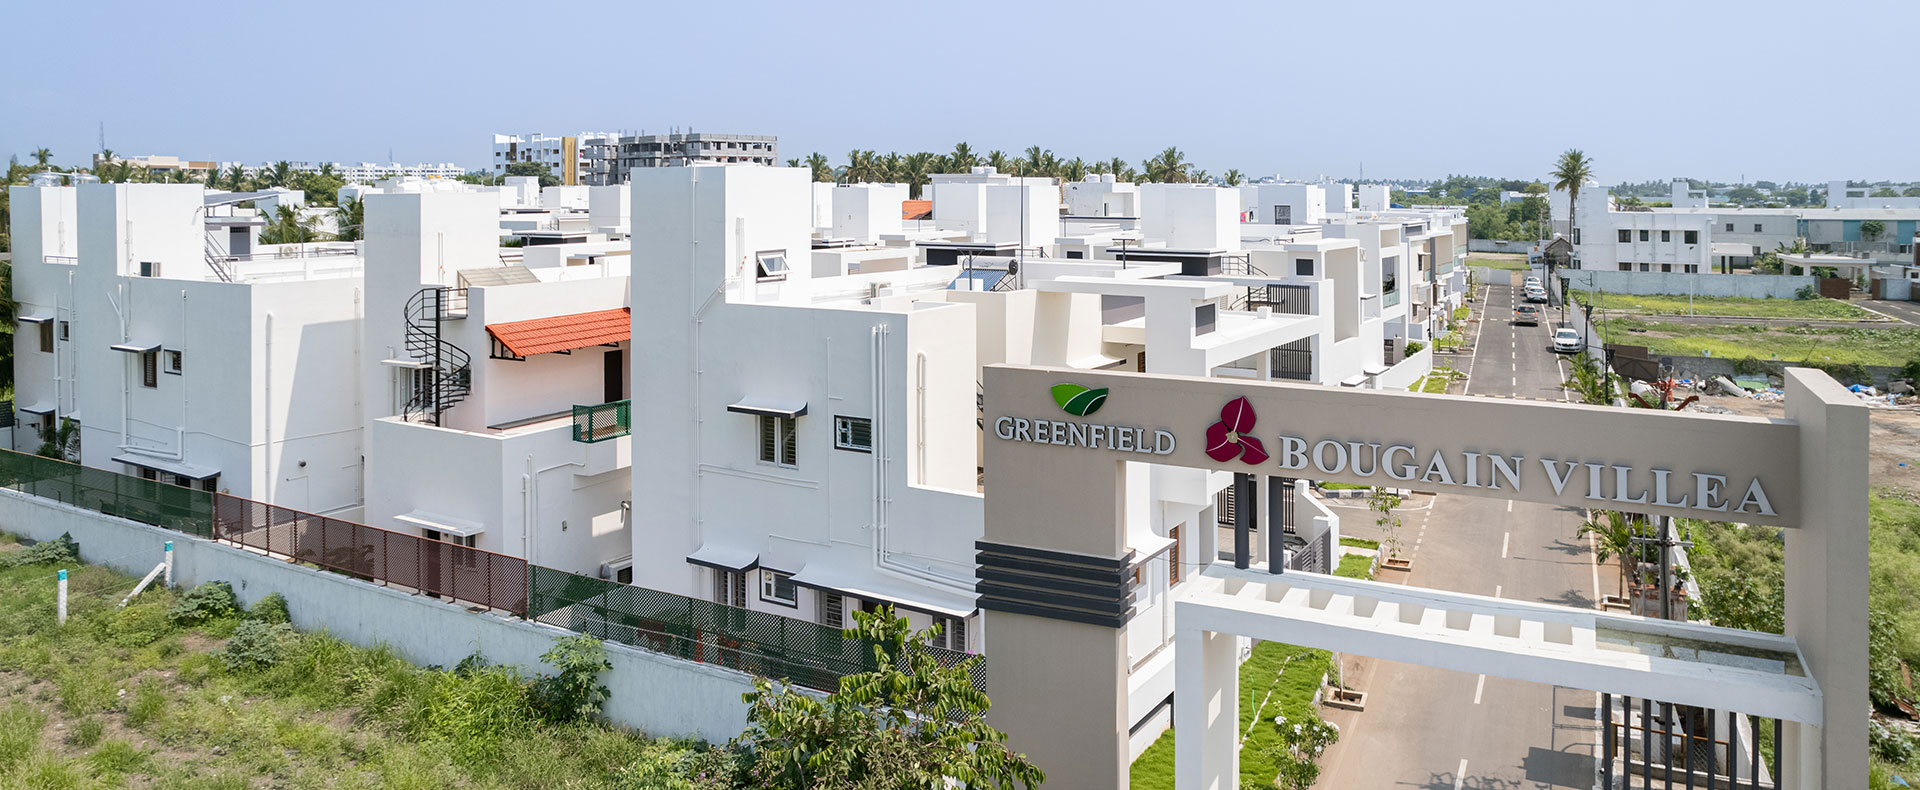 Bougain villa banner image - Green Field Housing India